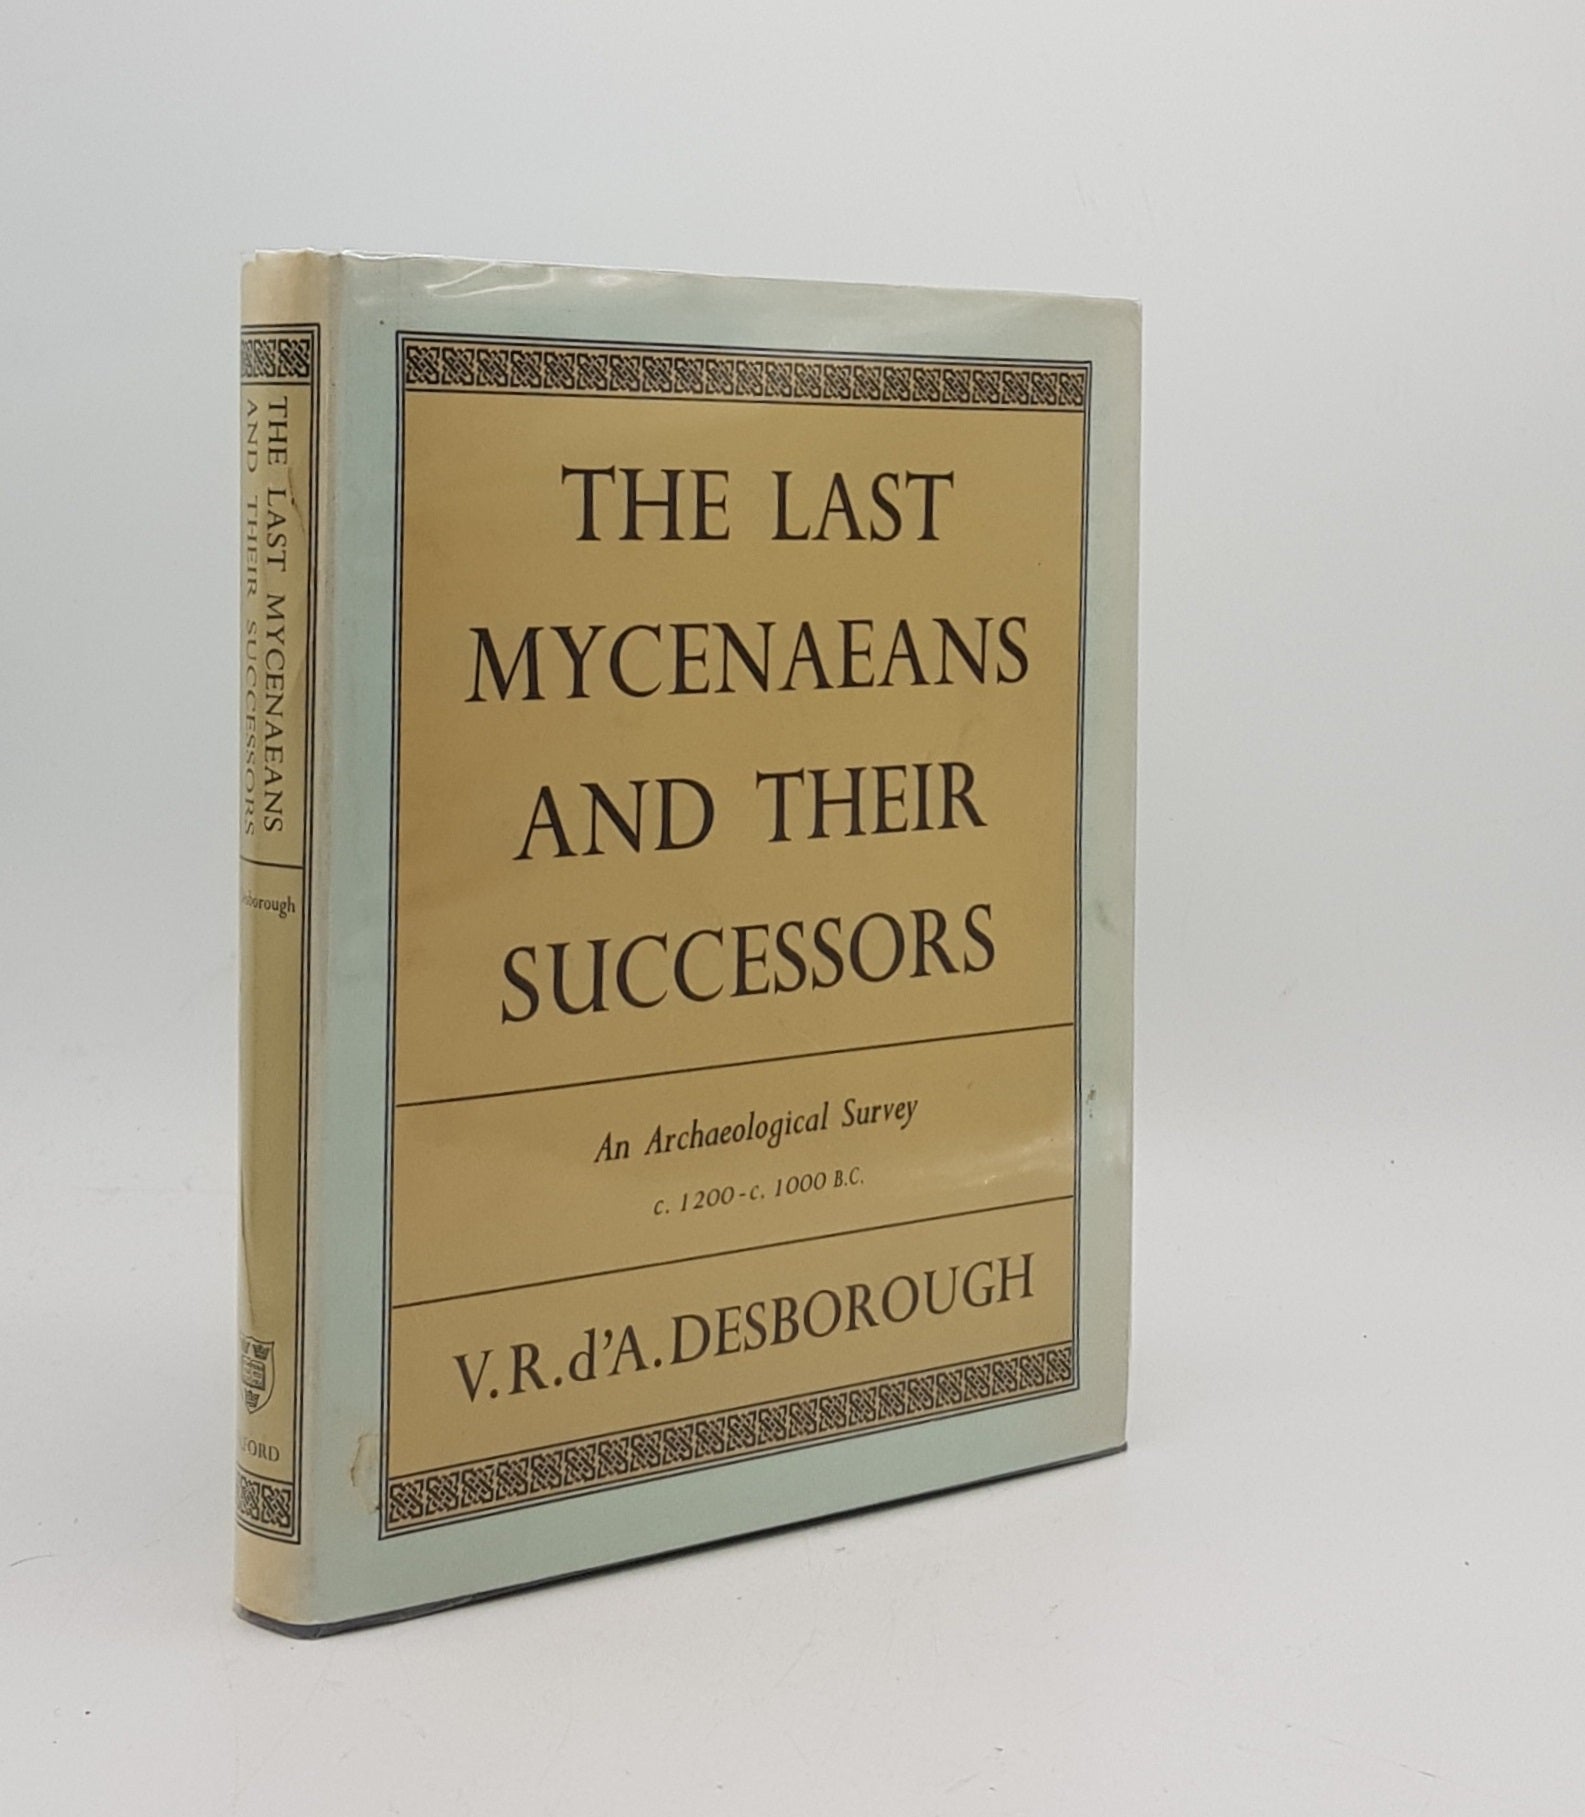 DESBOROUGH V.R.d'A - The Last Mycenaeans and Their Successors an Archaeological Survey C. 1200-C. 1000 B.C.